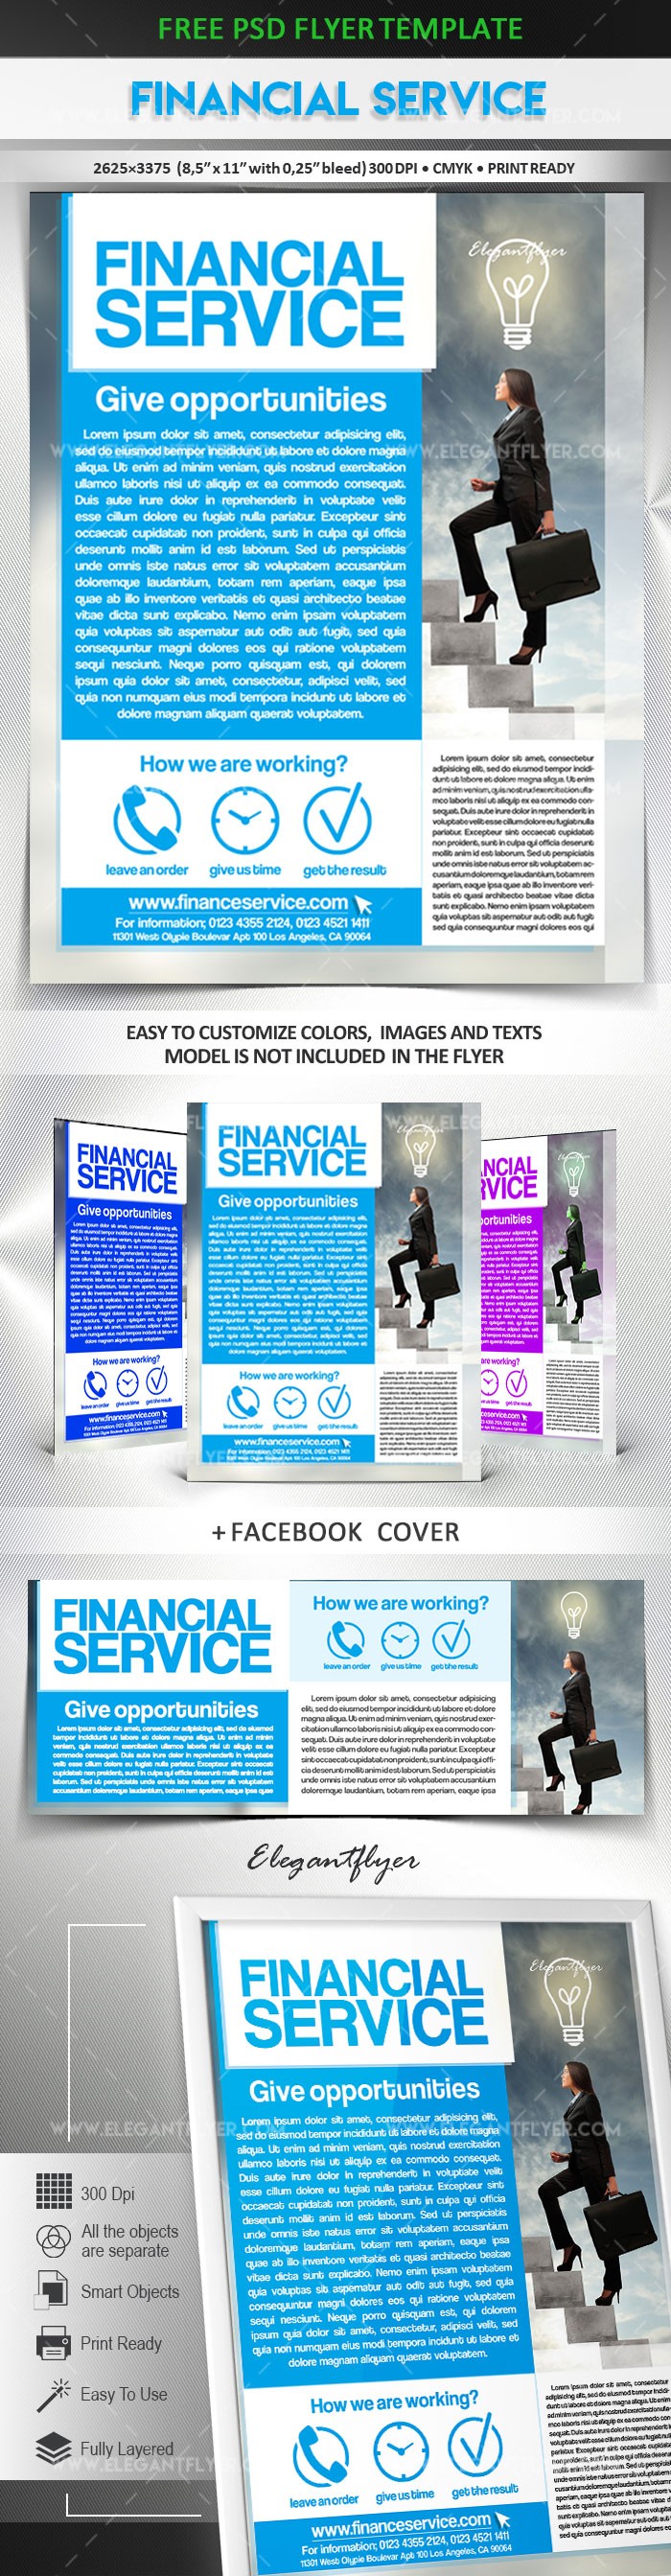 Financial service by ElegantFlyer